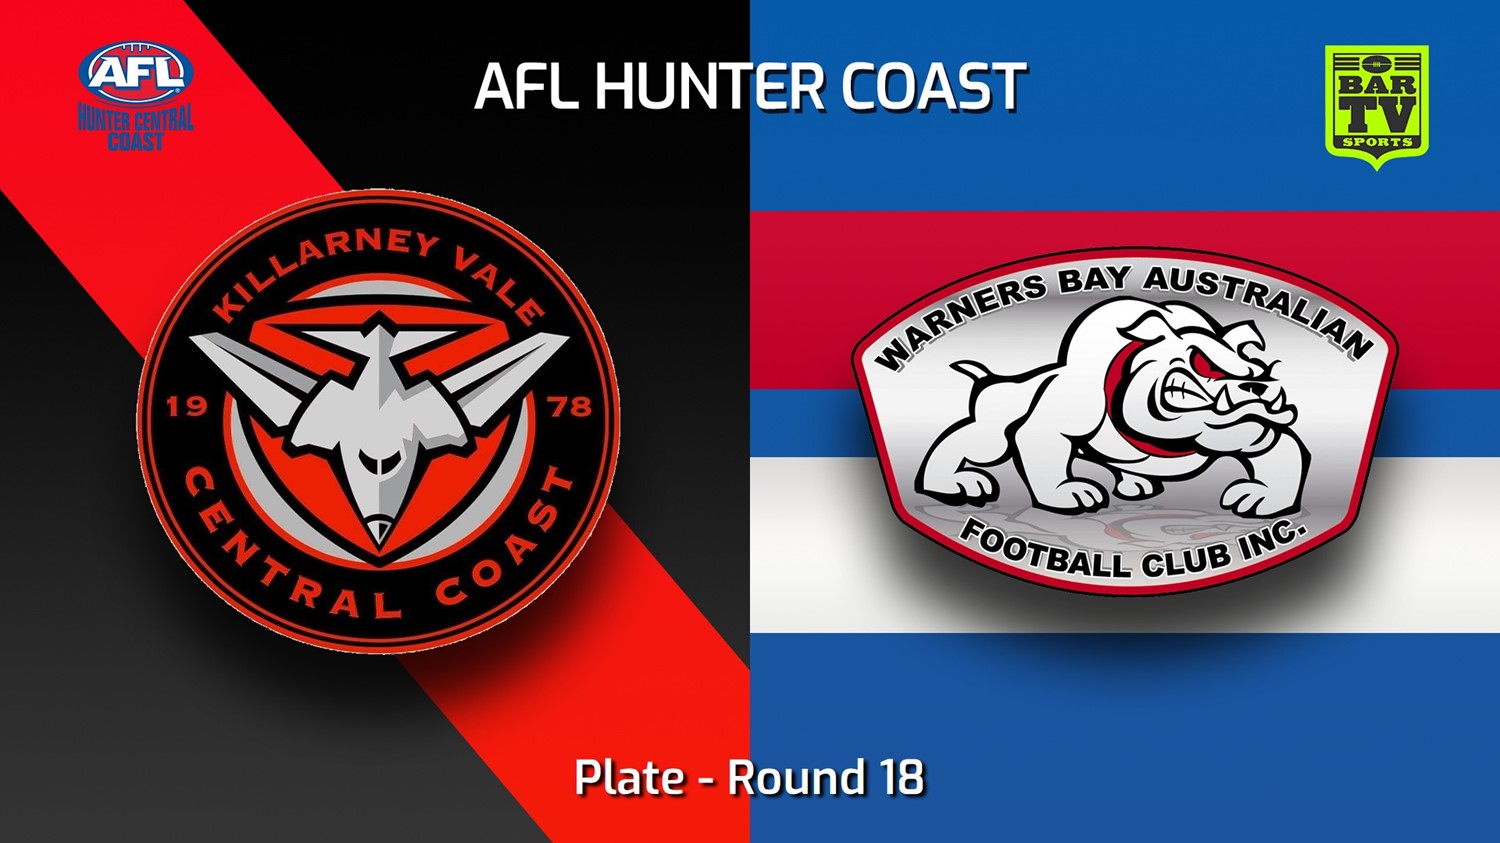 230819-AFL Hunter Central Coast Round 18 - Plate - Killarney Vale Bombers v Warners Bay Bulldogs Minigame Slate Image